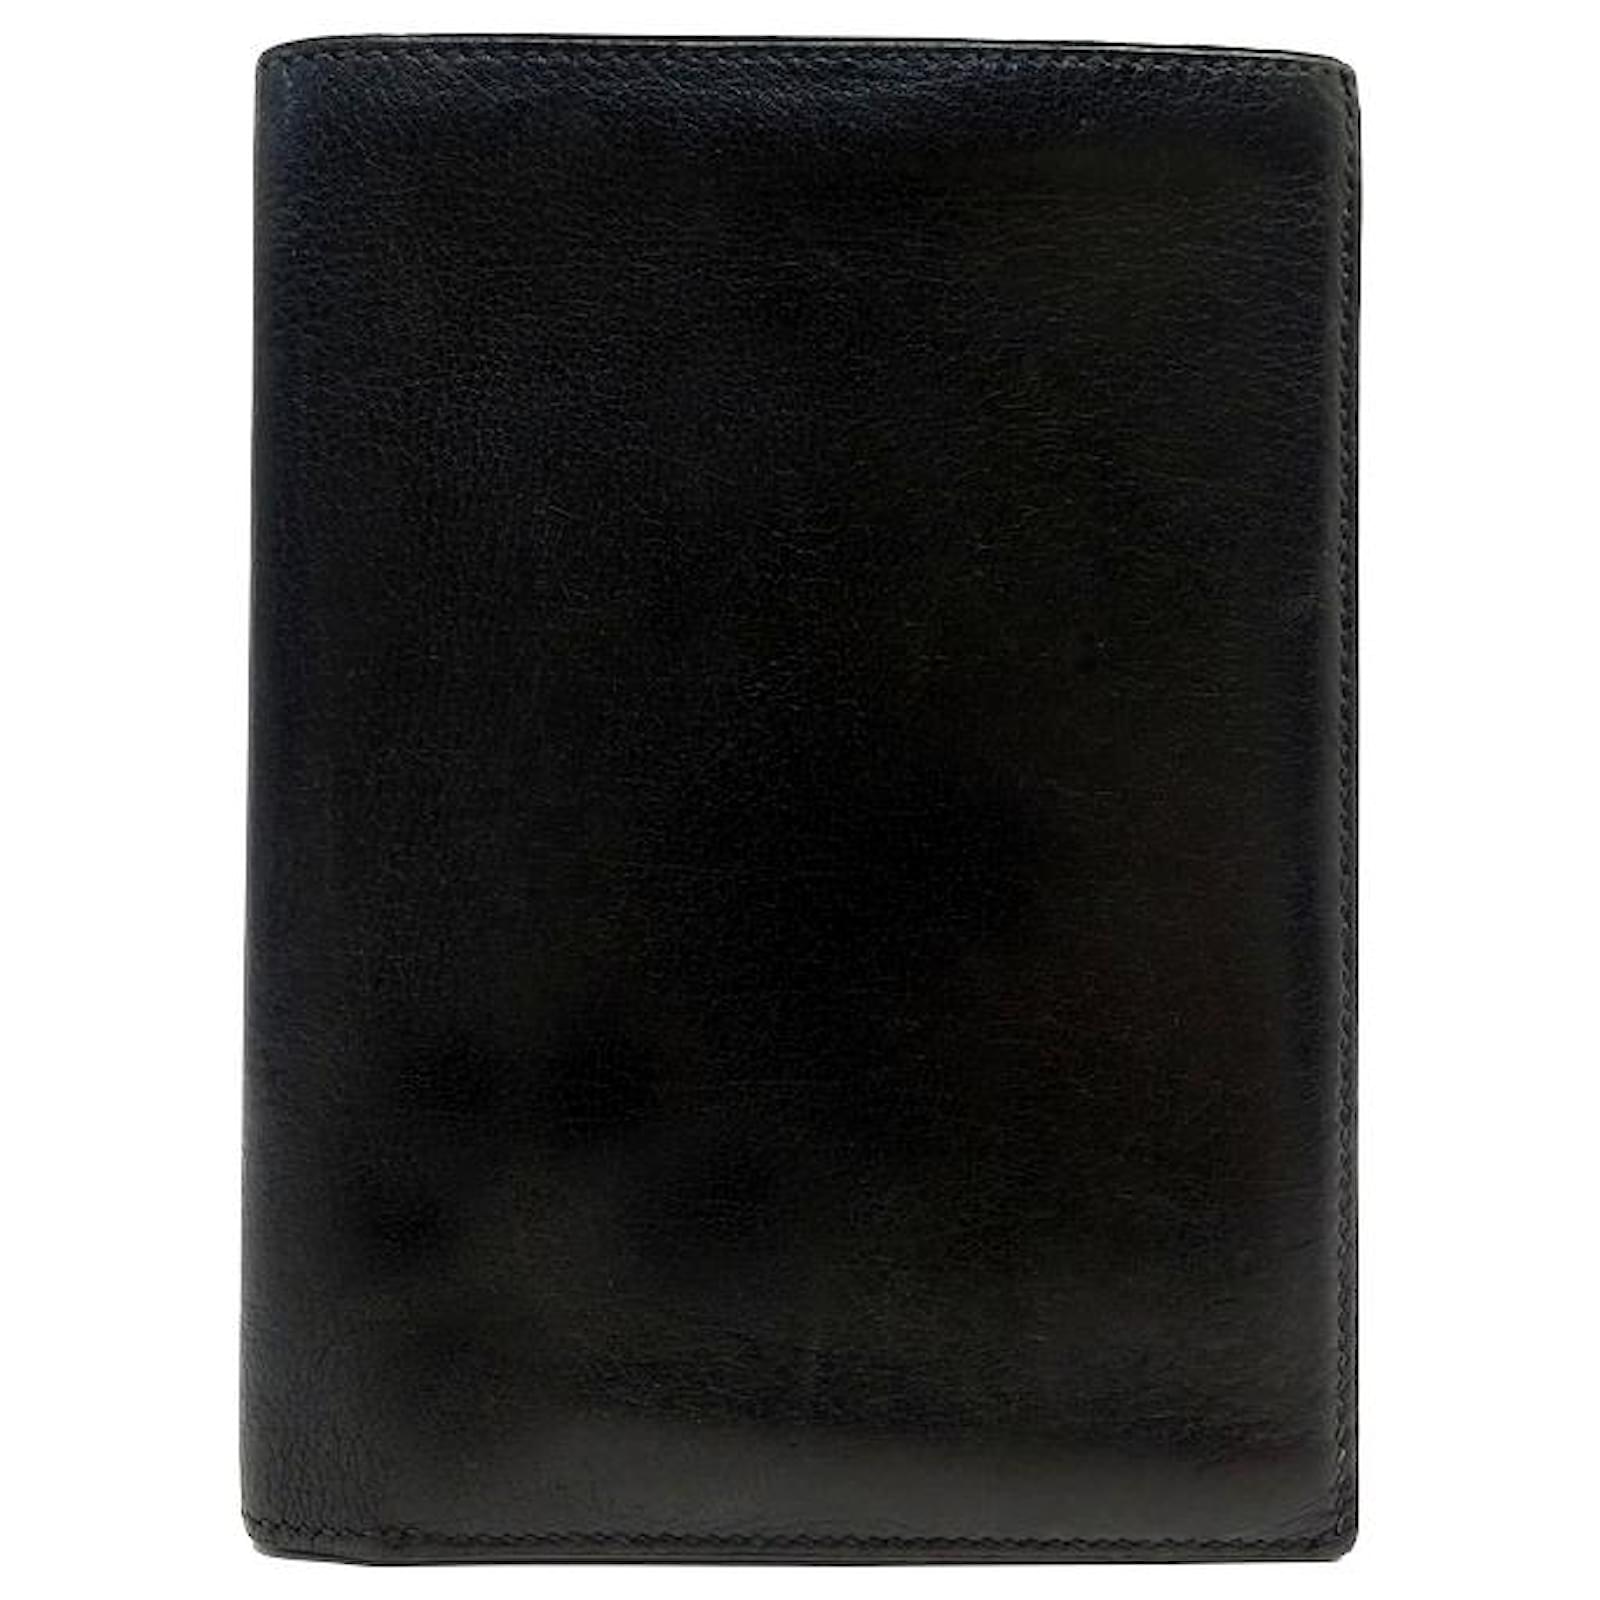 Hermès NEW HERMES WALLET IN BLACK LEATHER CARD HOLDER + LEATHER